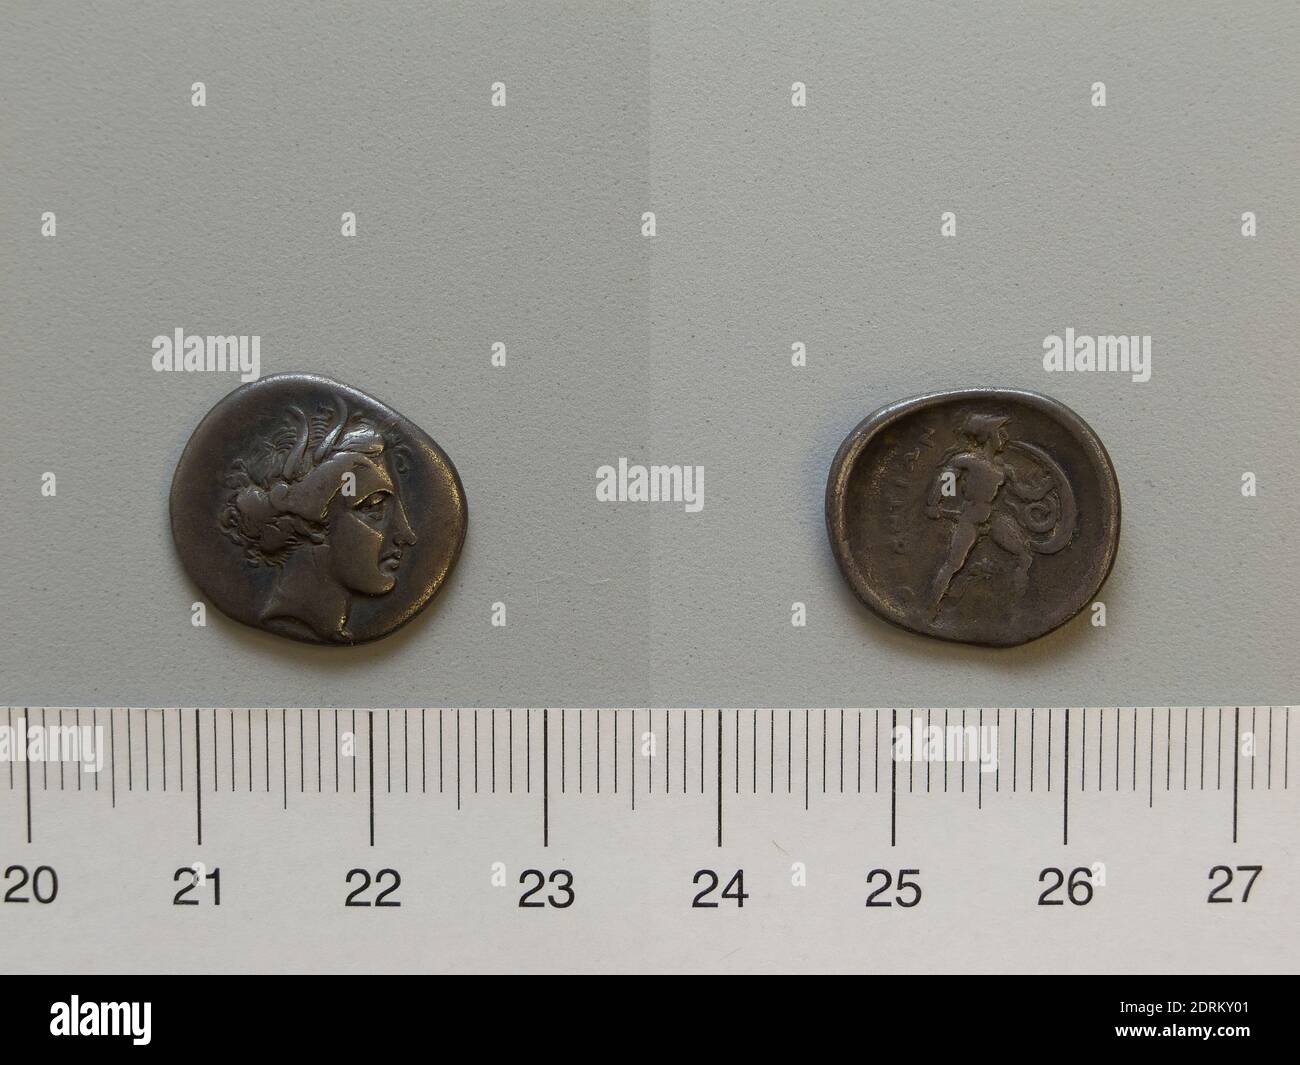 Mint: Locri Opuntii, Coin from Locris, 369–338 B.C., Silver, 2.44 g, 12:00, 17.6 mm, Made in Locris Opuntii, Locris, Greek, 4th century B.C., Numismatics Stock Photo